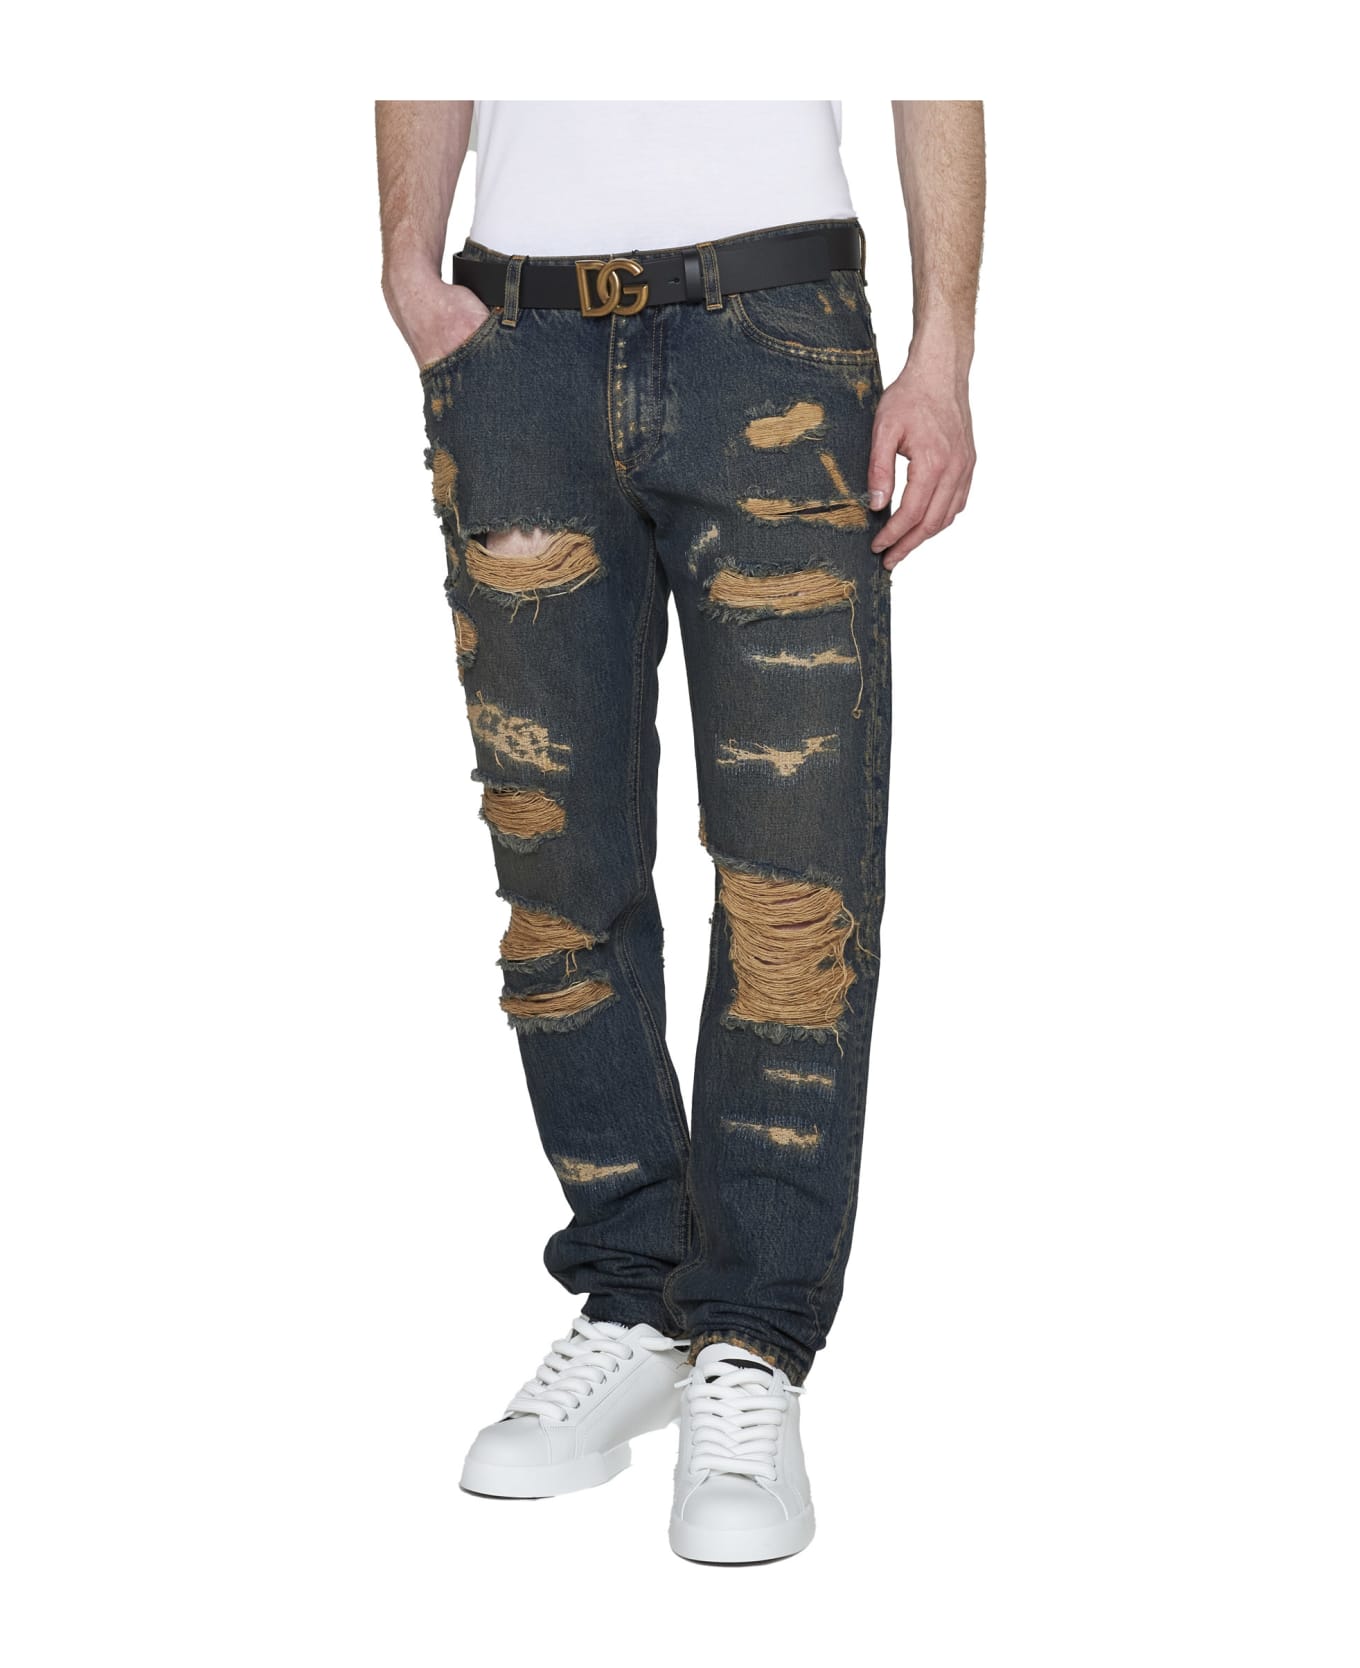 Dolce & Gabbana Jeans - Variante abbinata